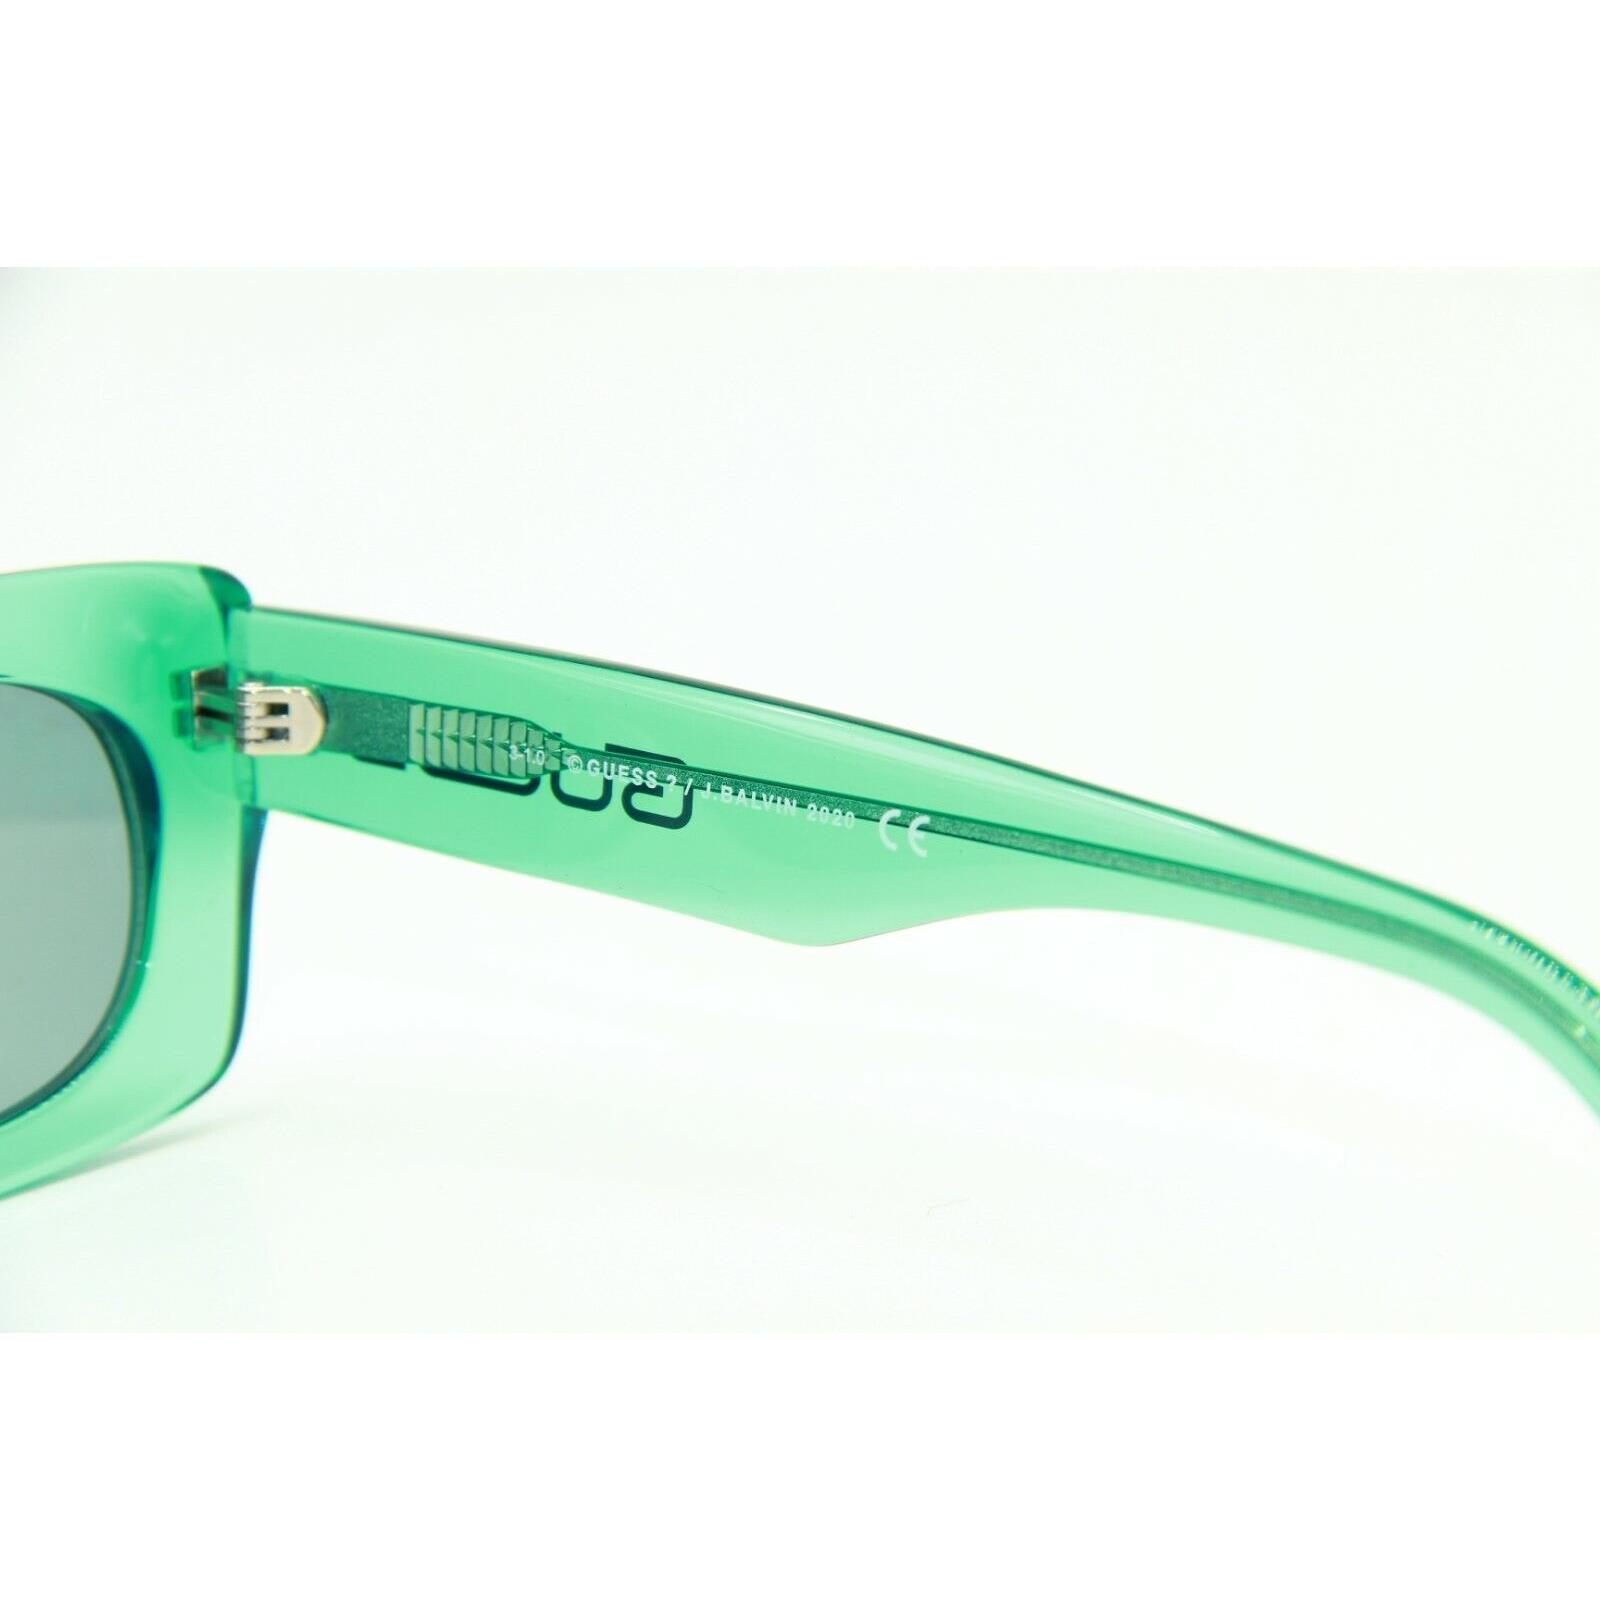 Guess GU 8225/S 95N Green Sunglasses W/ Case 53-20 - Guess 